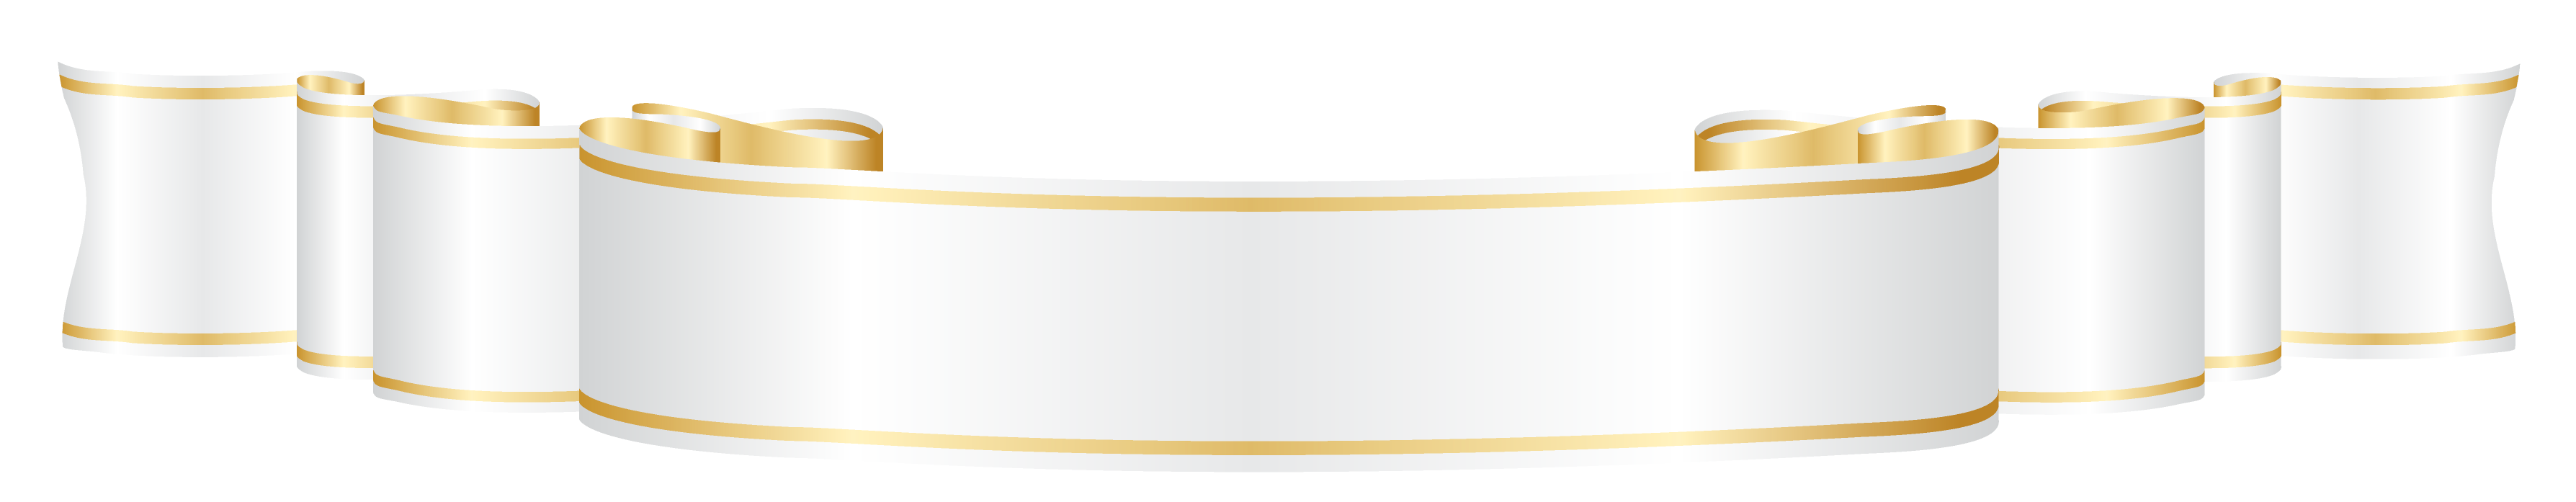 Golden Banner PNG Image with Transparent Background